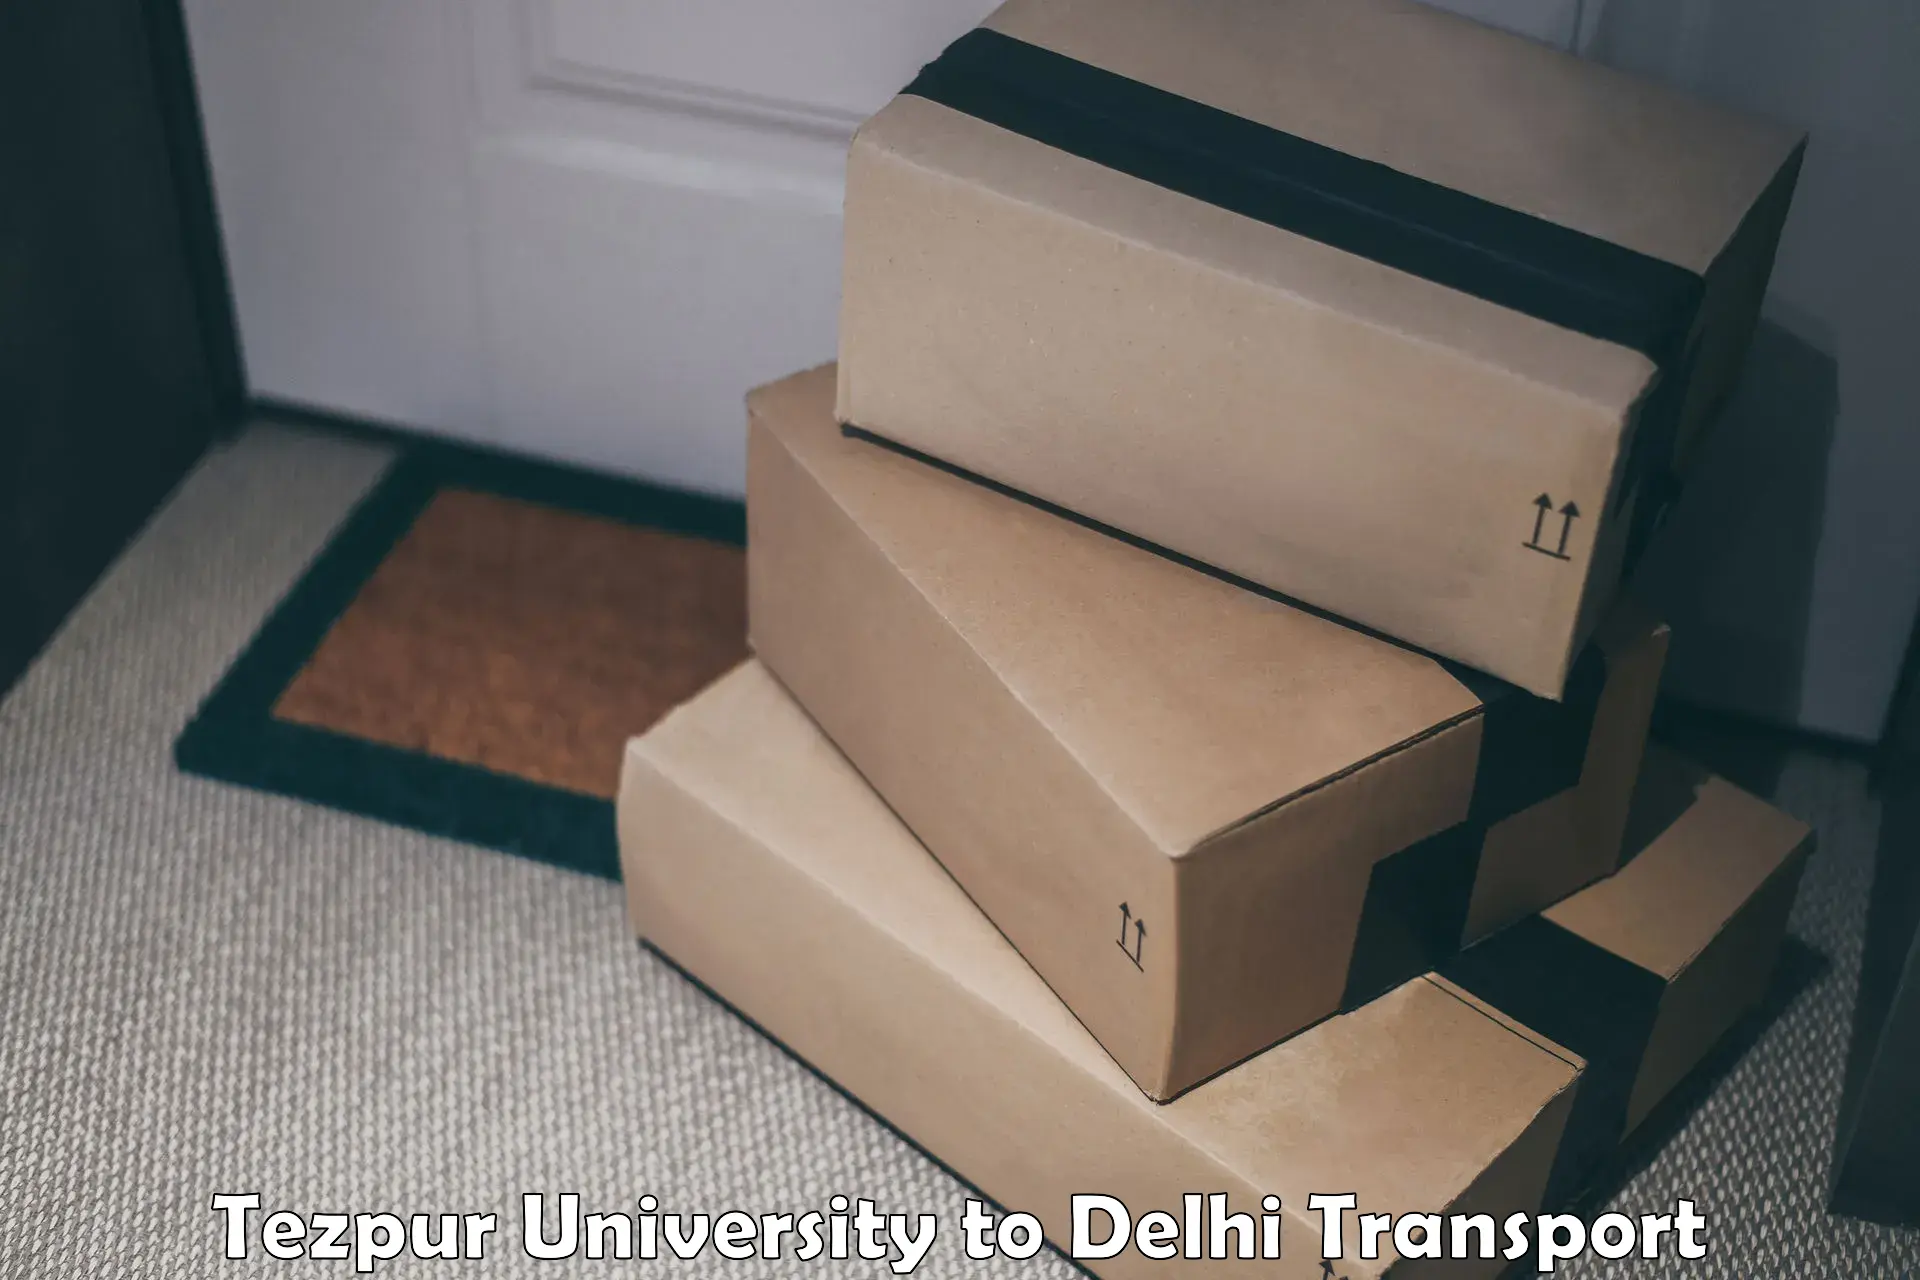 Container transport service Tezpur University to University of Delhi